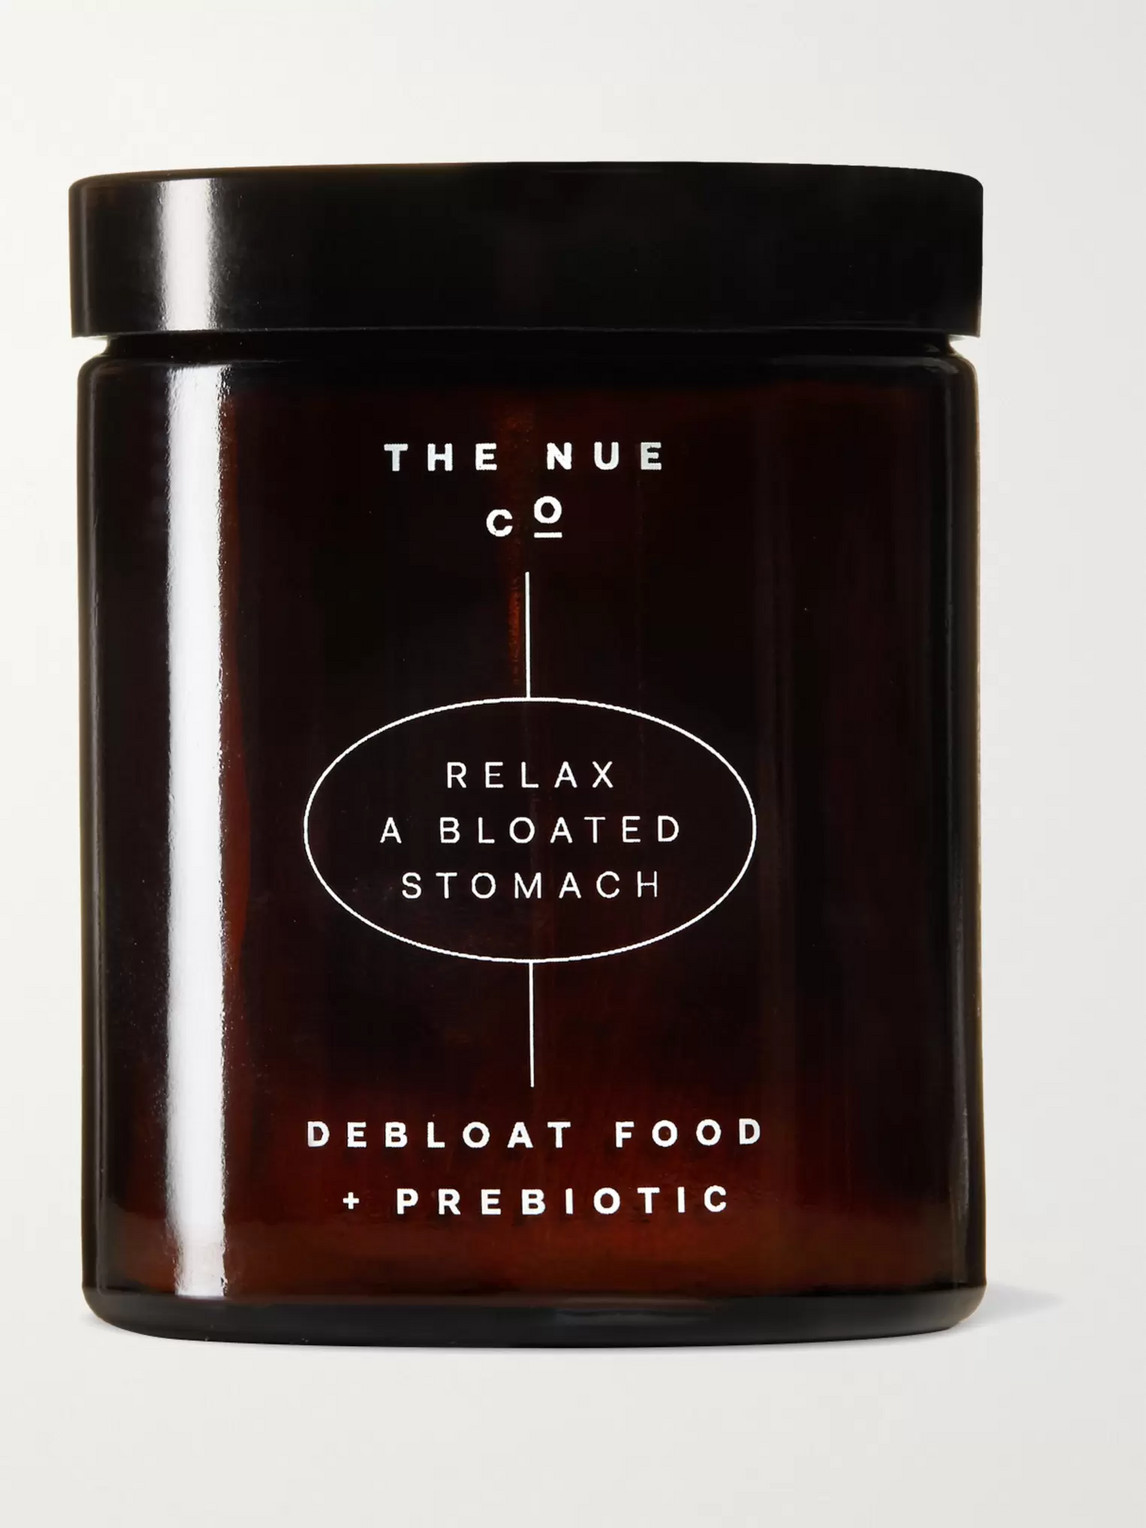 The Nue Co. Debloat Food Prebiotic Supplement, 100g In Colorless